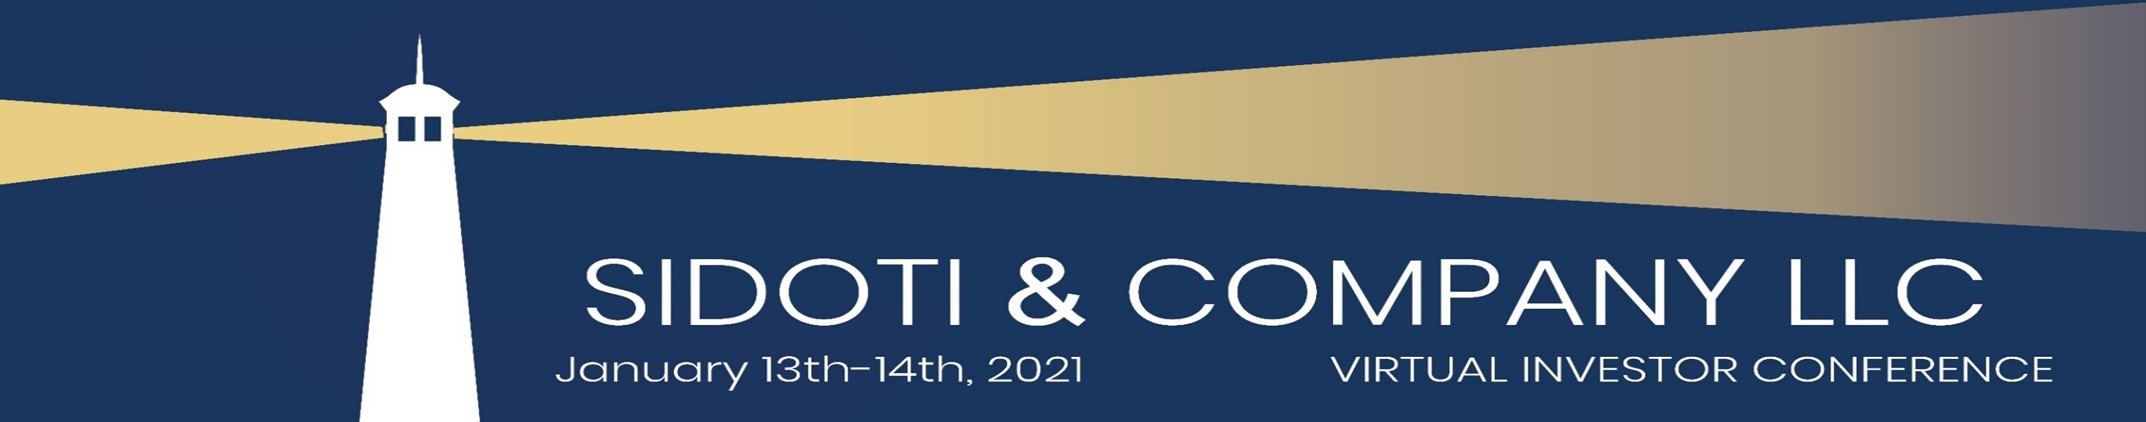 Sidoti & Company, LLC, Wednesday, January 13, 2021, Press release picture